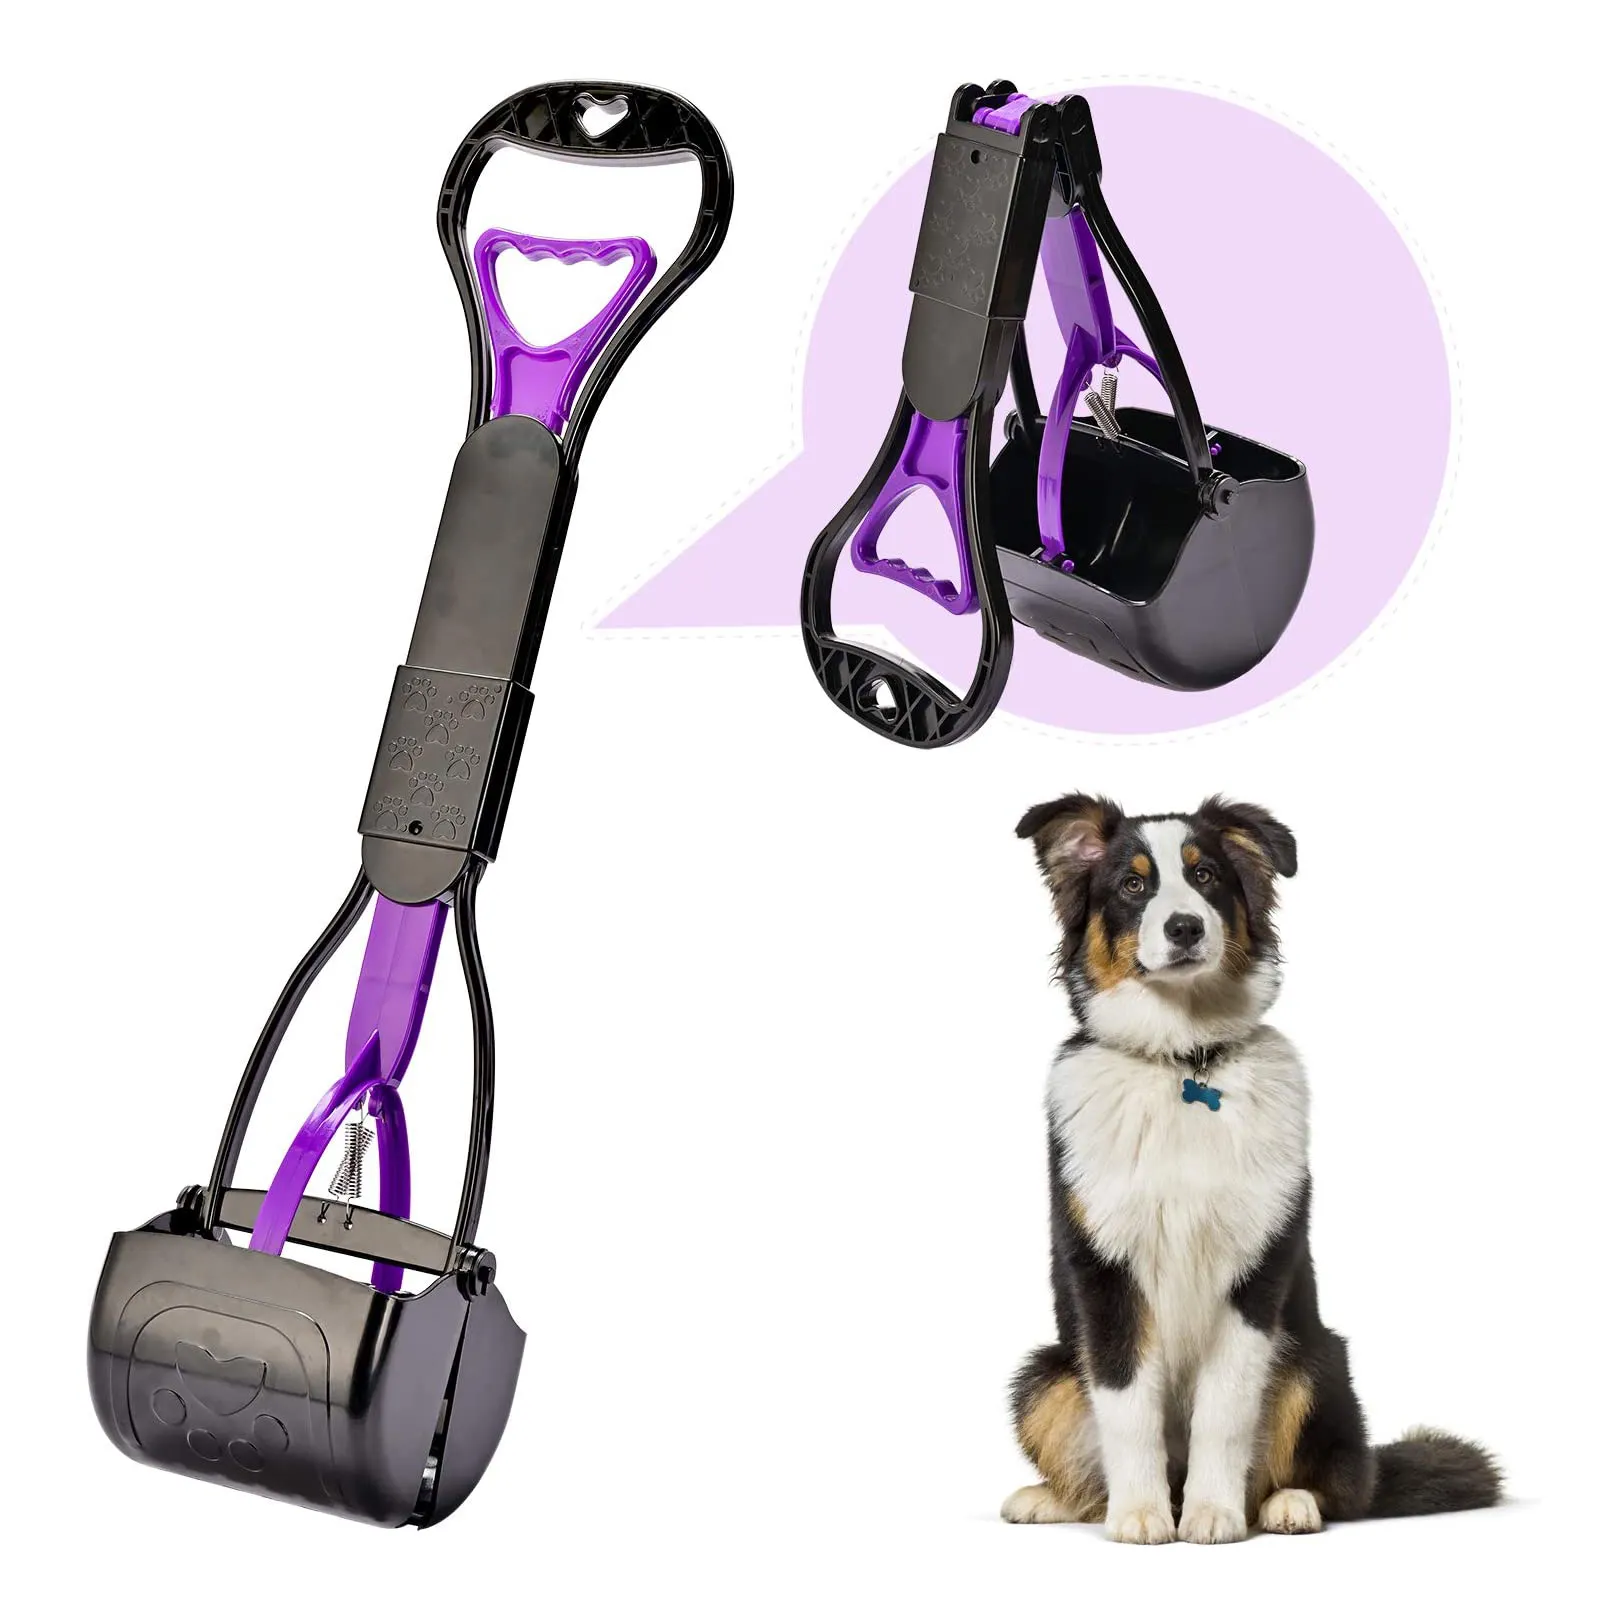 Handle dog poop picker foldab Long handle Portable Plastic Pet Dog Travel Pooper Scooper Picker Cleaning Tools Outdoor